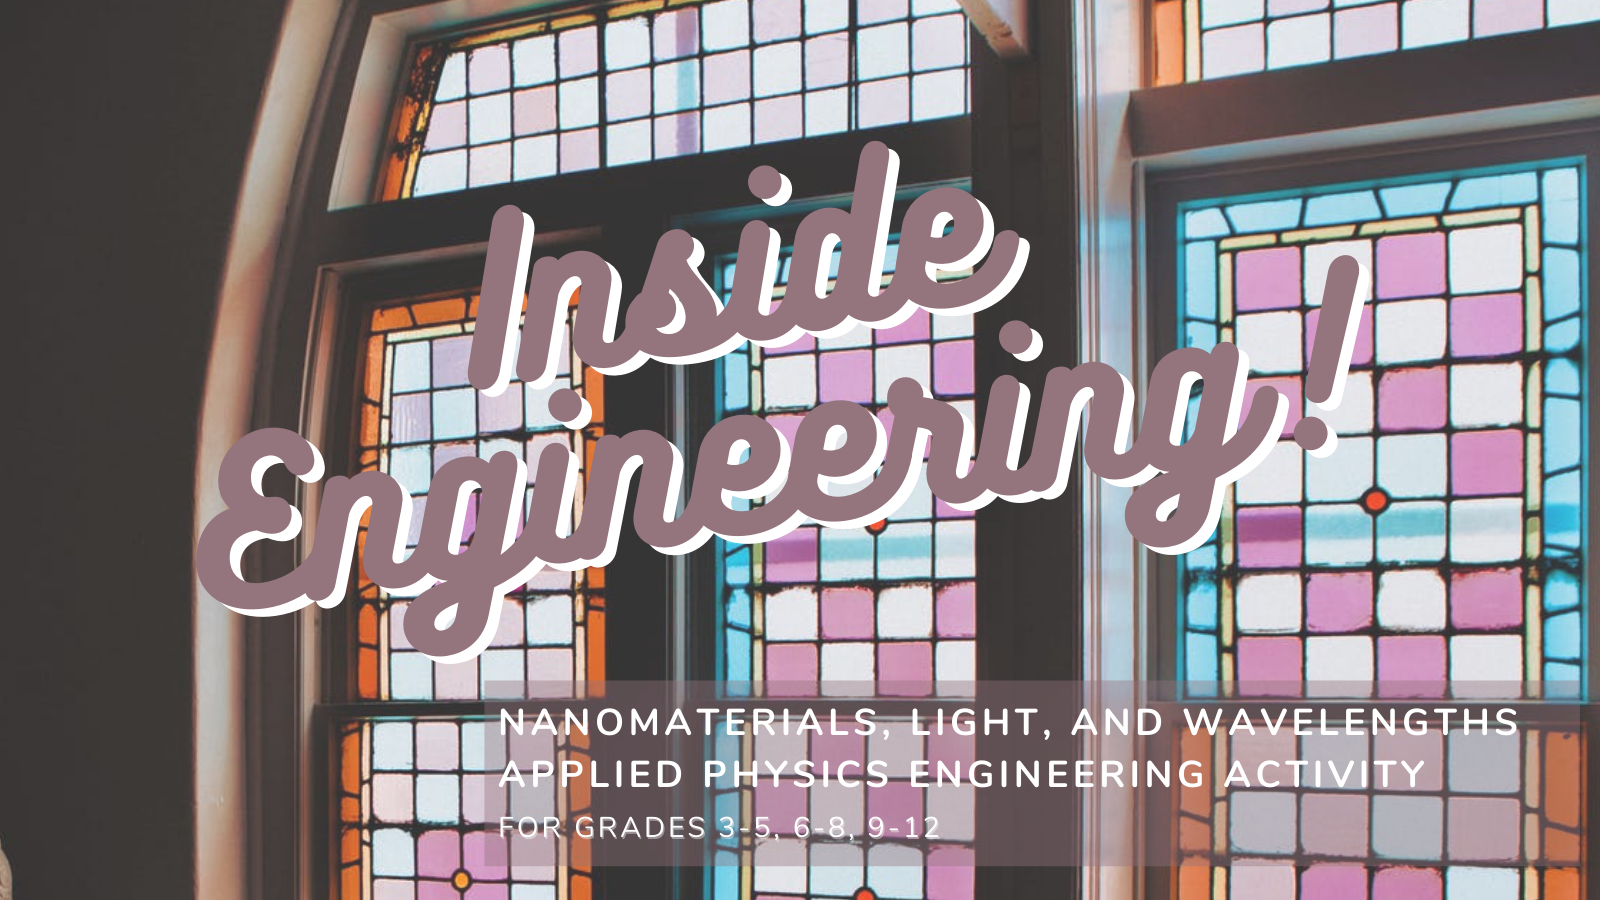 Inside Engineering: Nanomaterials, Light, and Wavelengths